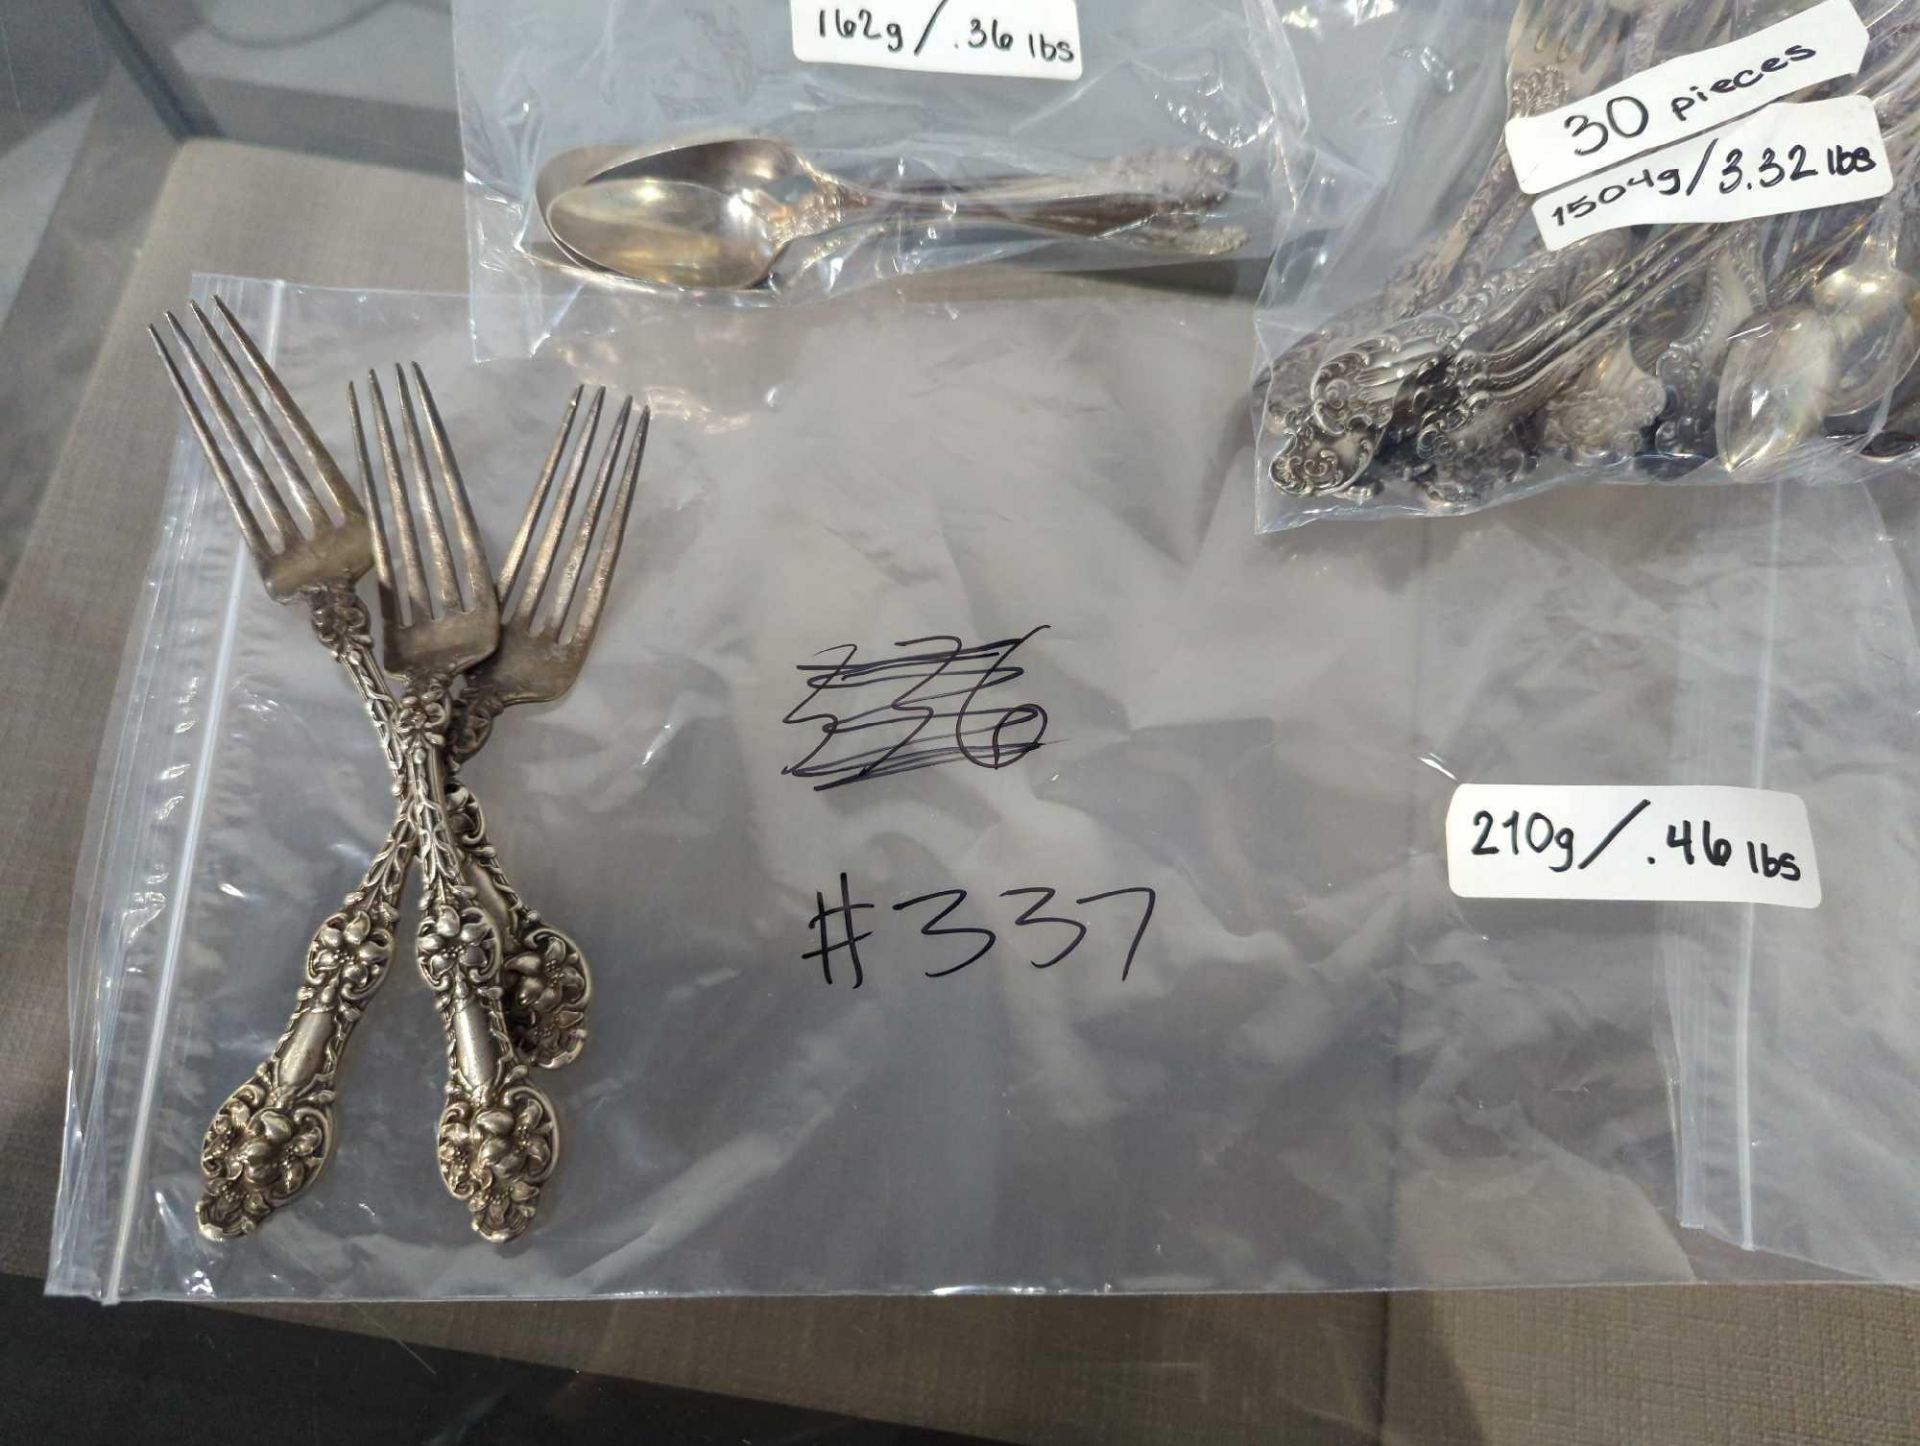 sterling silver utensils - Image 2 of 6